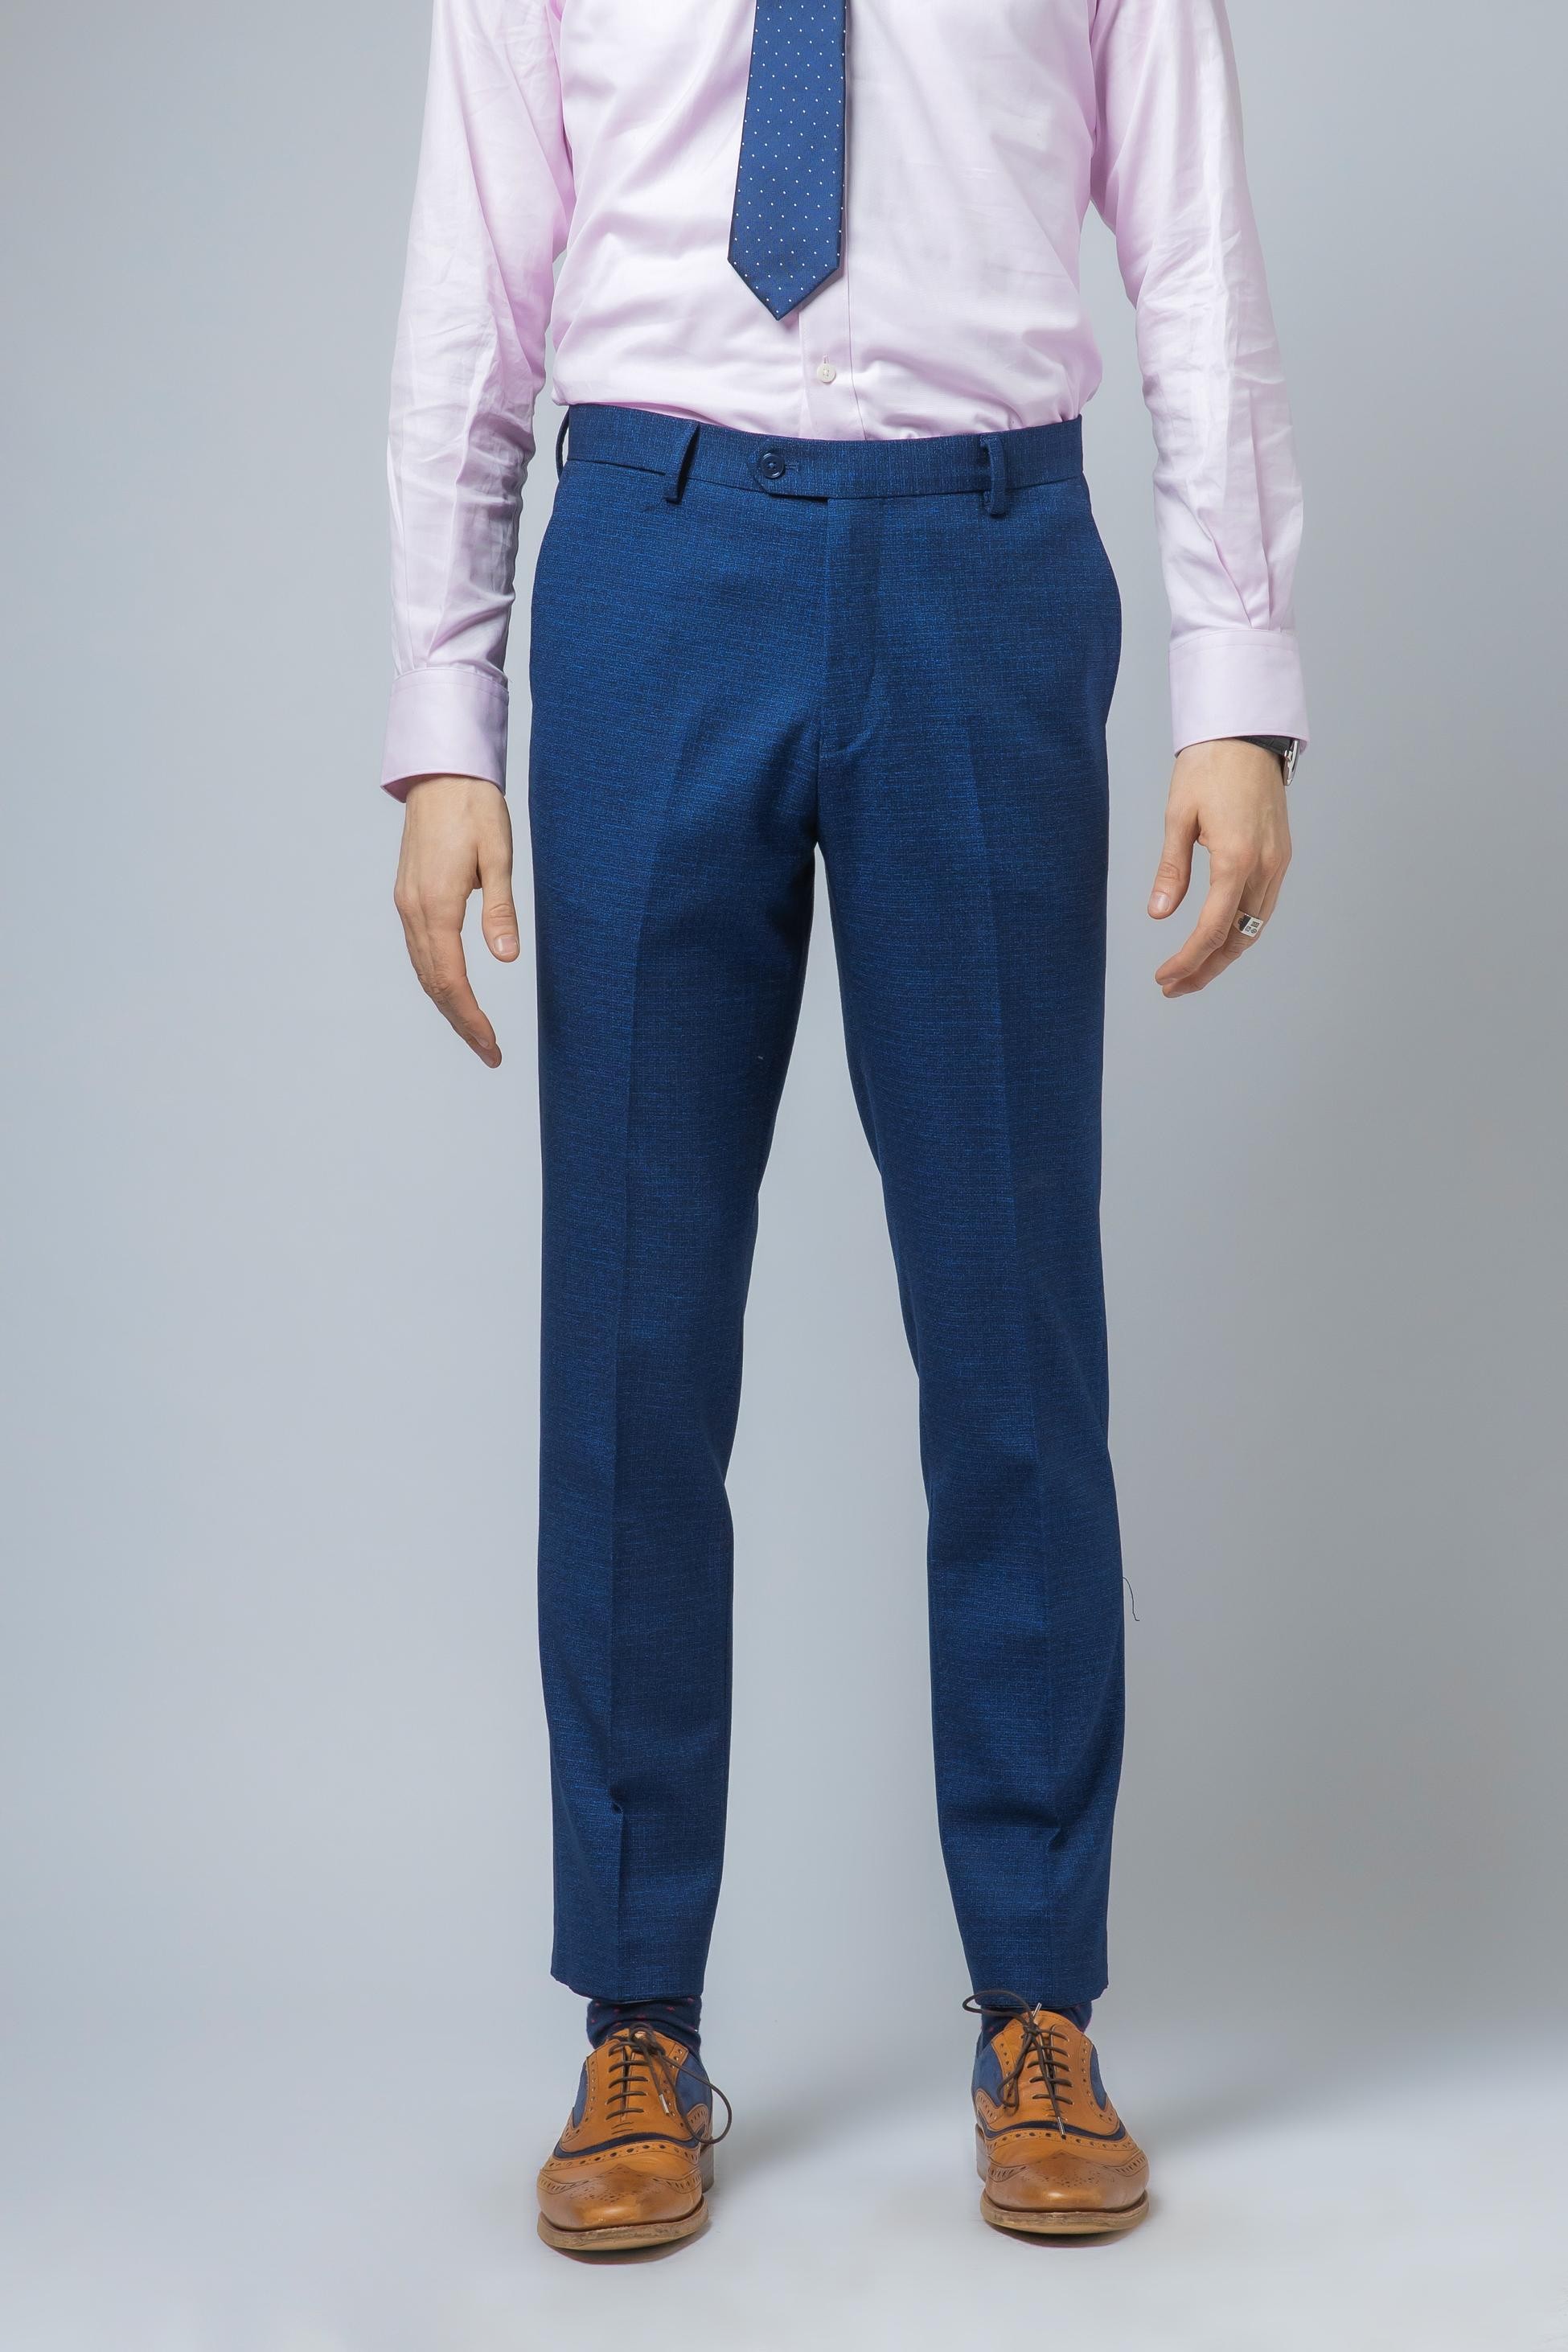 Men's Slim Fit Blue Pants - MATEO